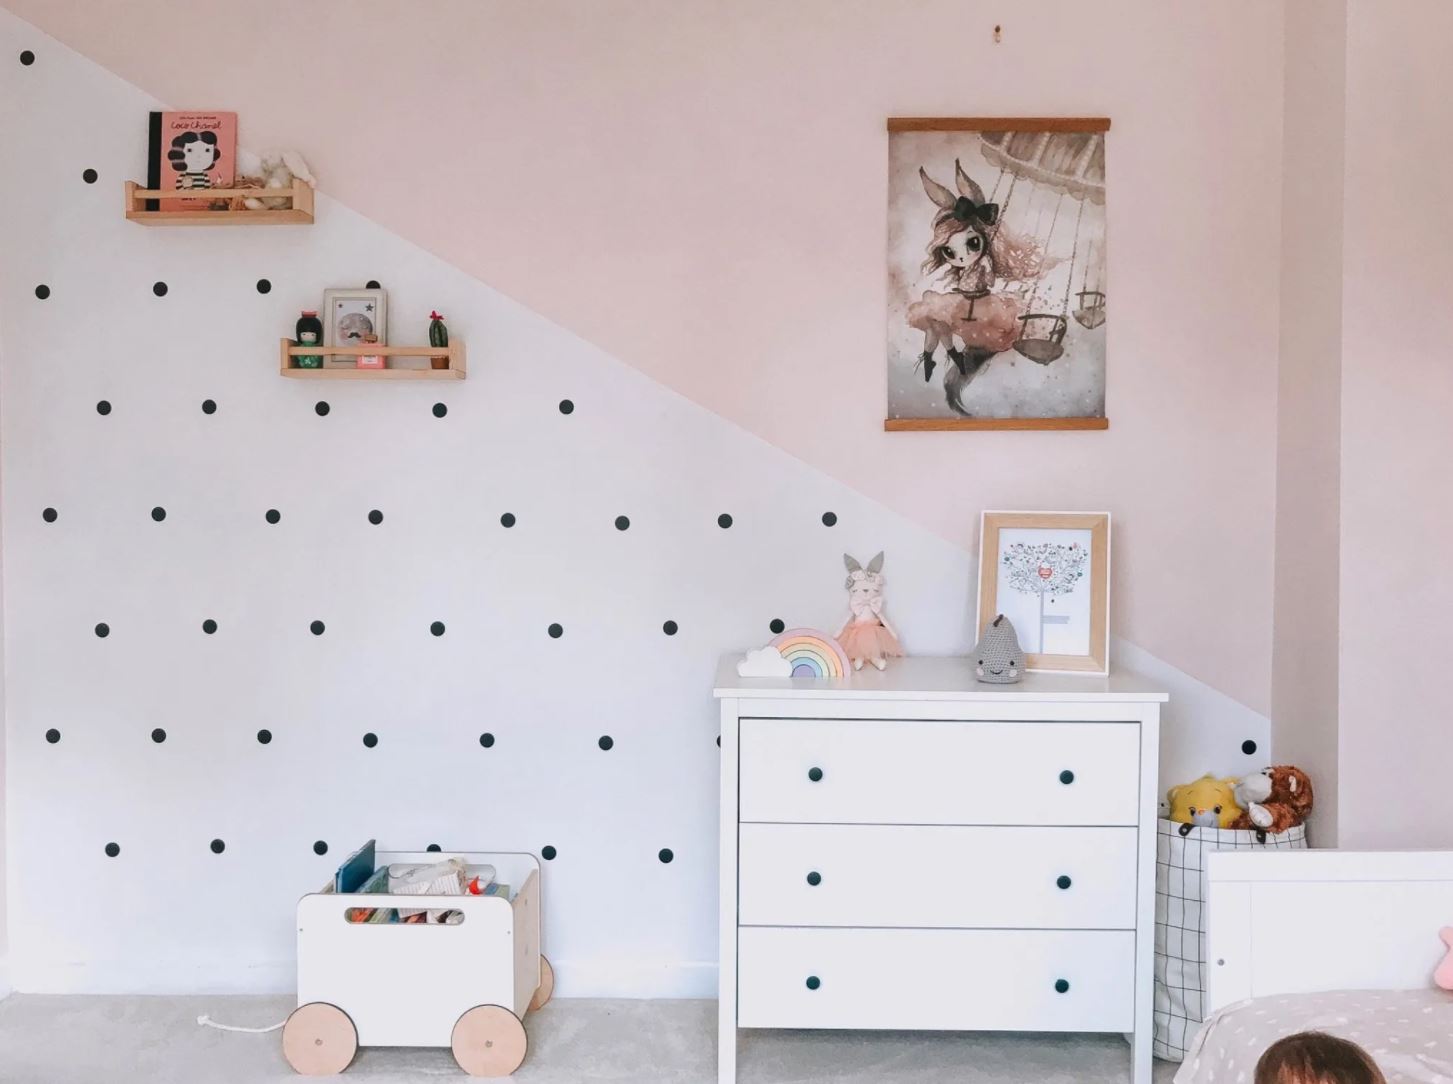 IKEA spice racks in a girl's pink bedroom.